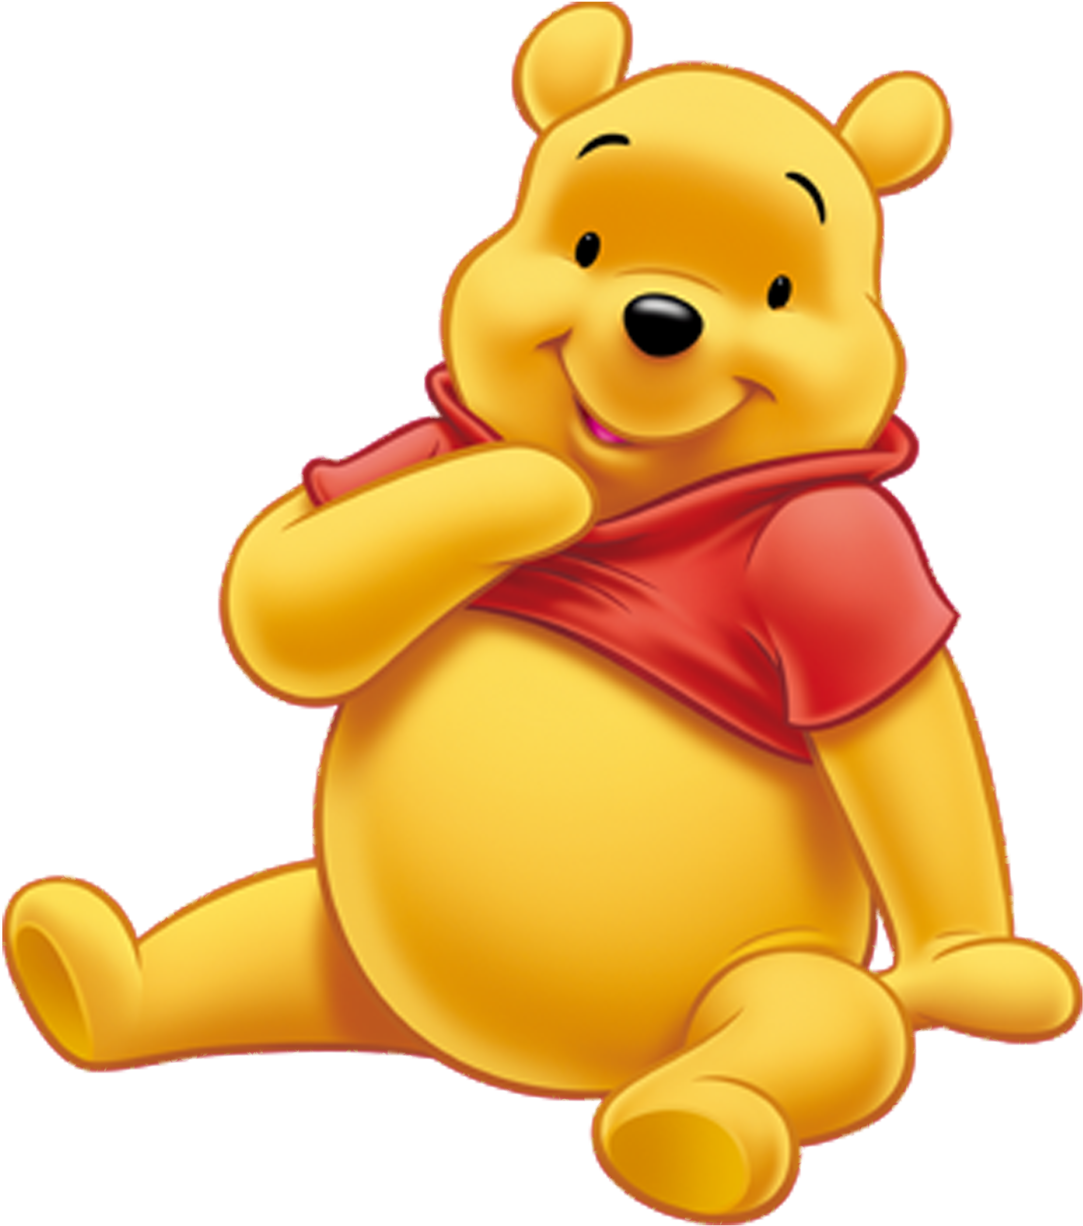 Http - //img-fotki - Yandex - Ru/get/6436/16969765 - Winnie The Pooh Png Hd Clipart (1280x1280), Png Download